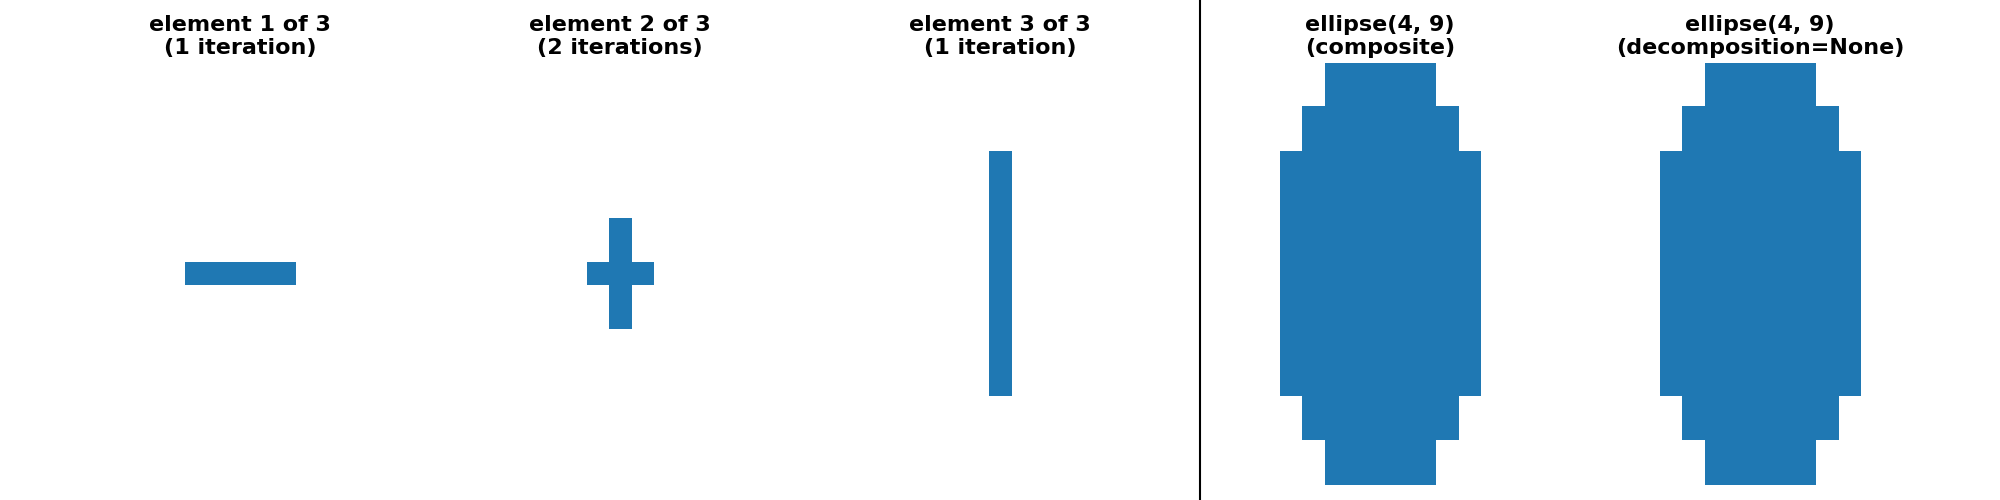 ellipse(4, 9) (decomposition=None), ellipse(4, 9) (composite), element 1 of 3 (1 iteration), element 2 of 3 (2 iterations), element 3 of 3 (1 iteration)